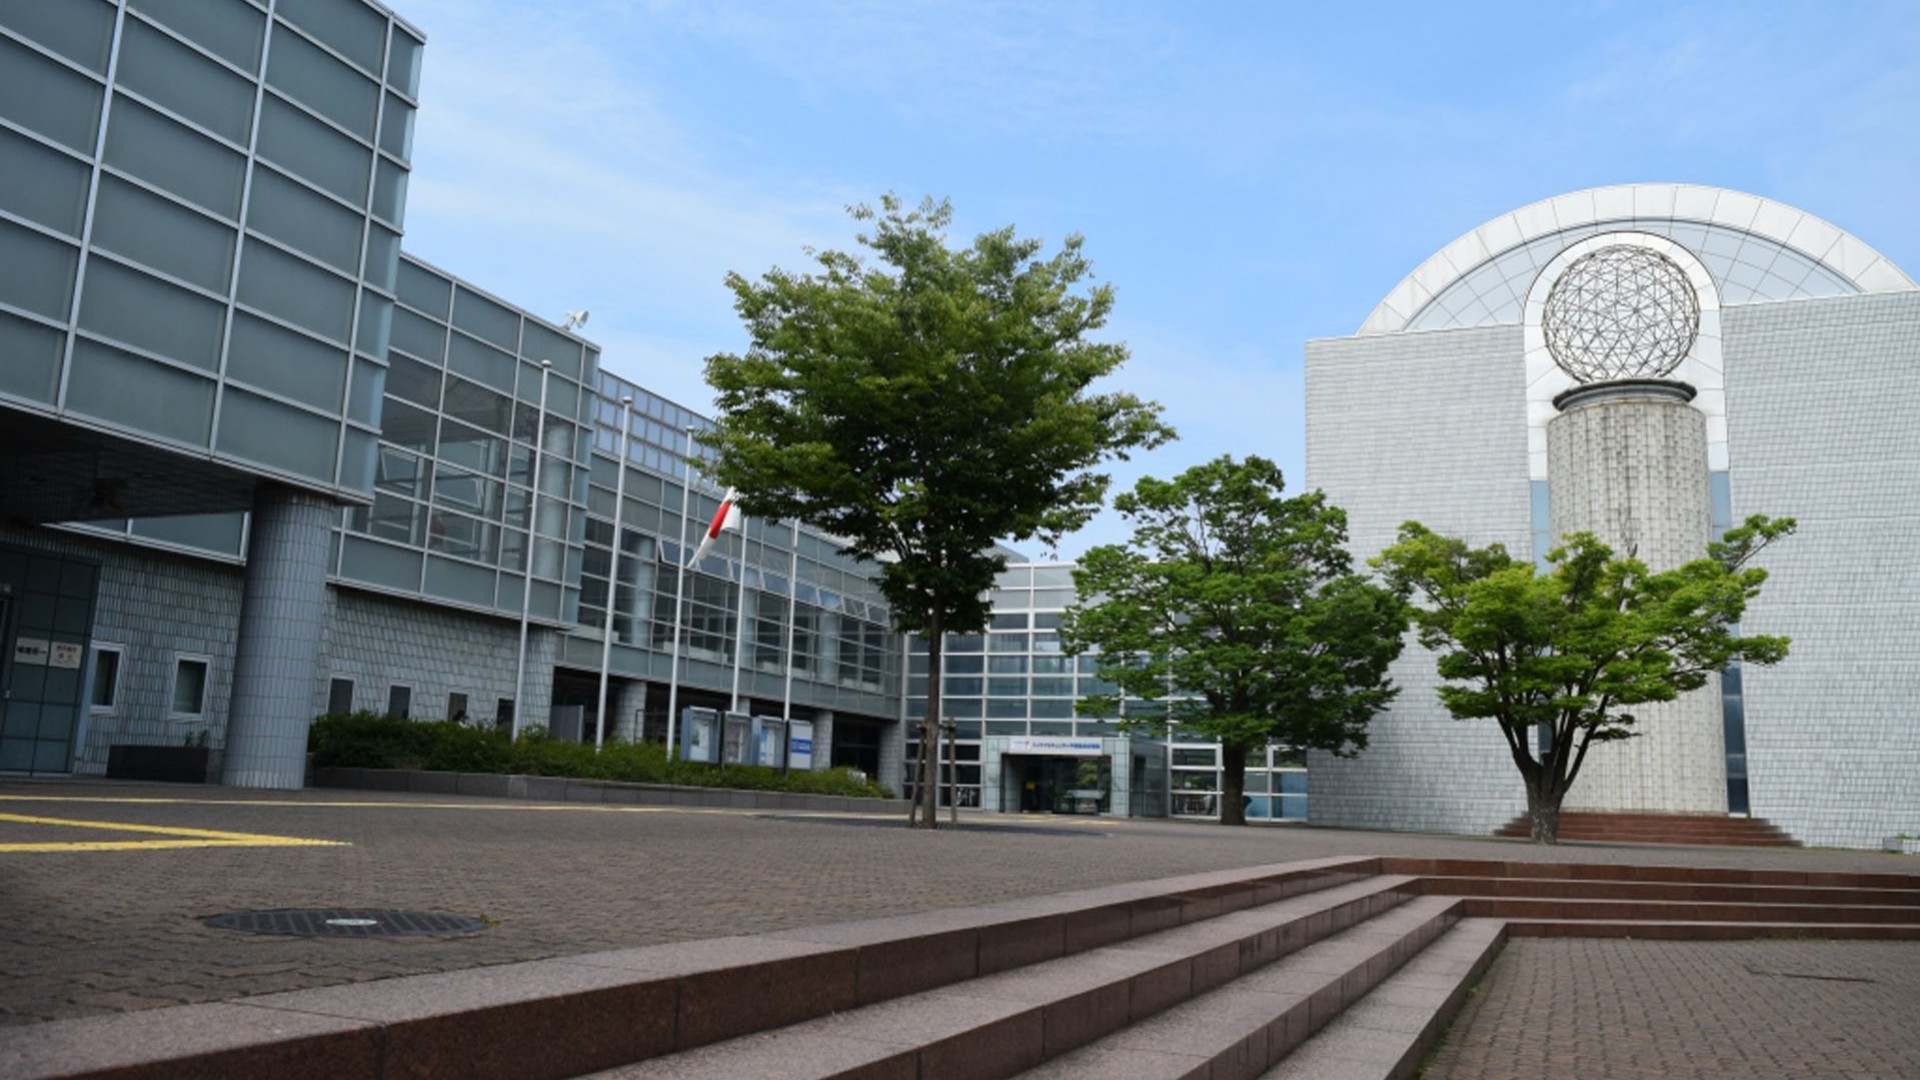 Trung tâm thể dục Tokkei Security Hiratsuka